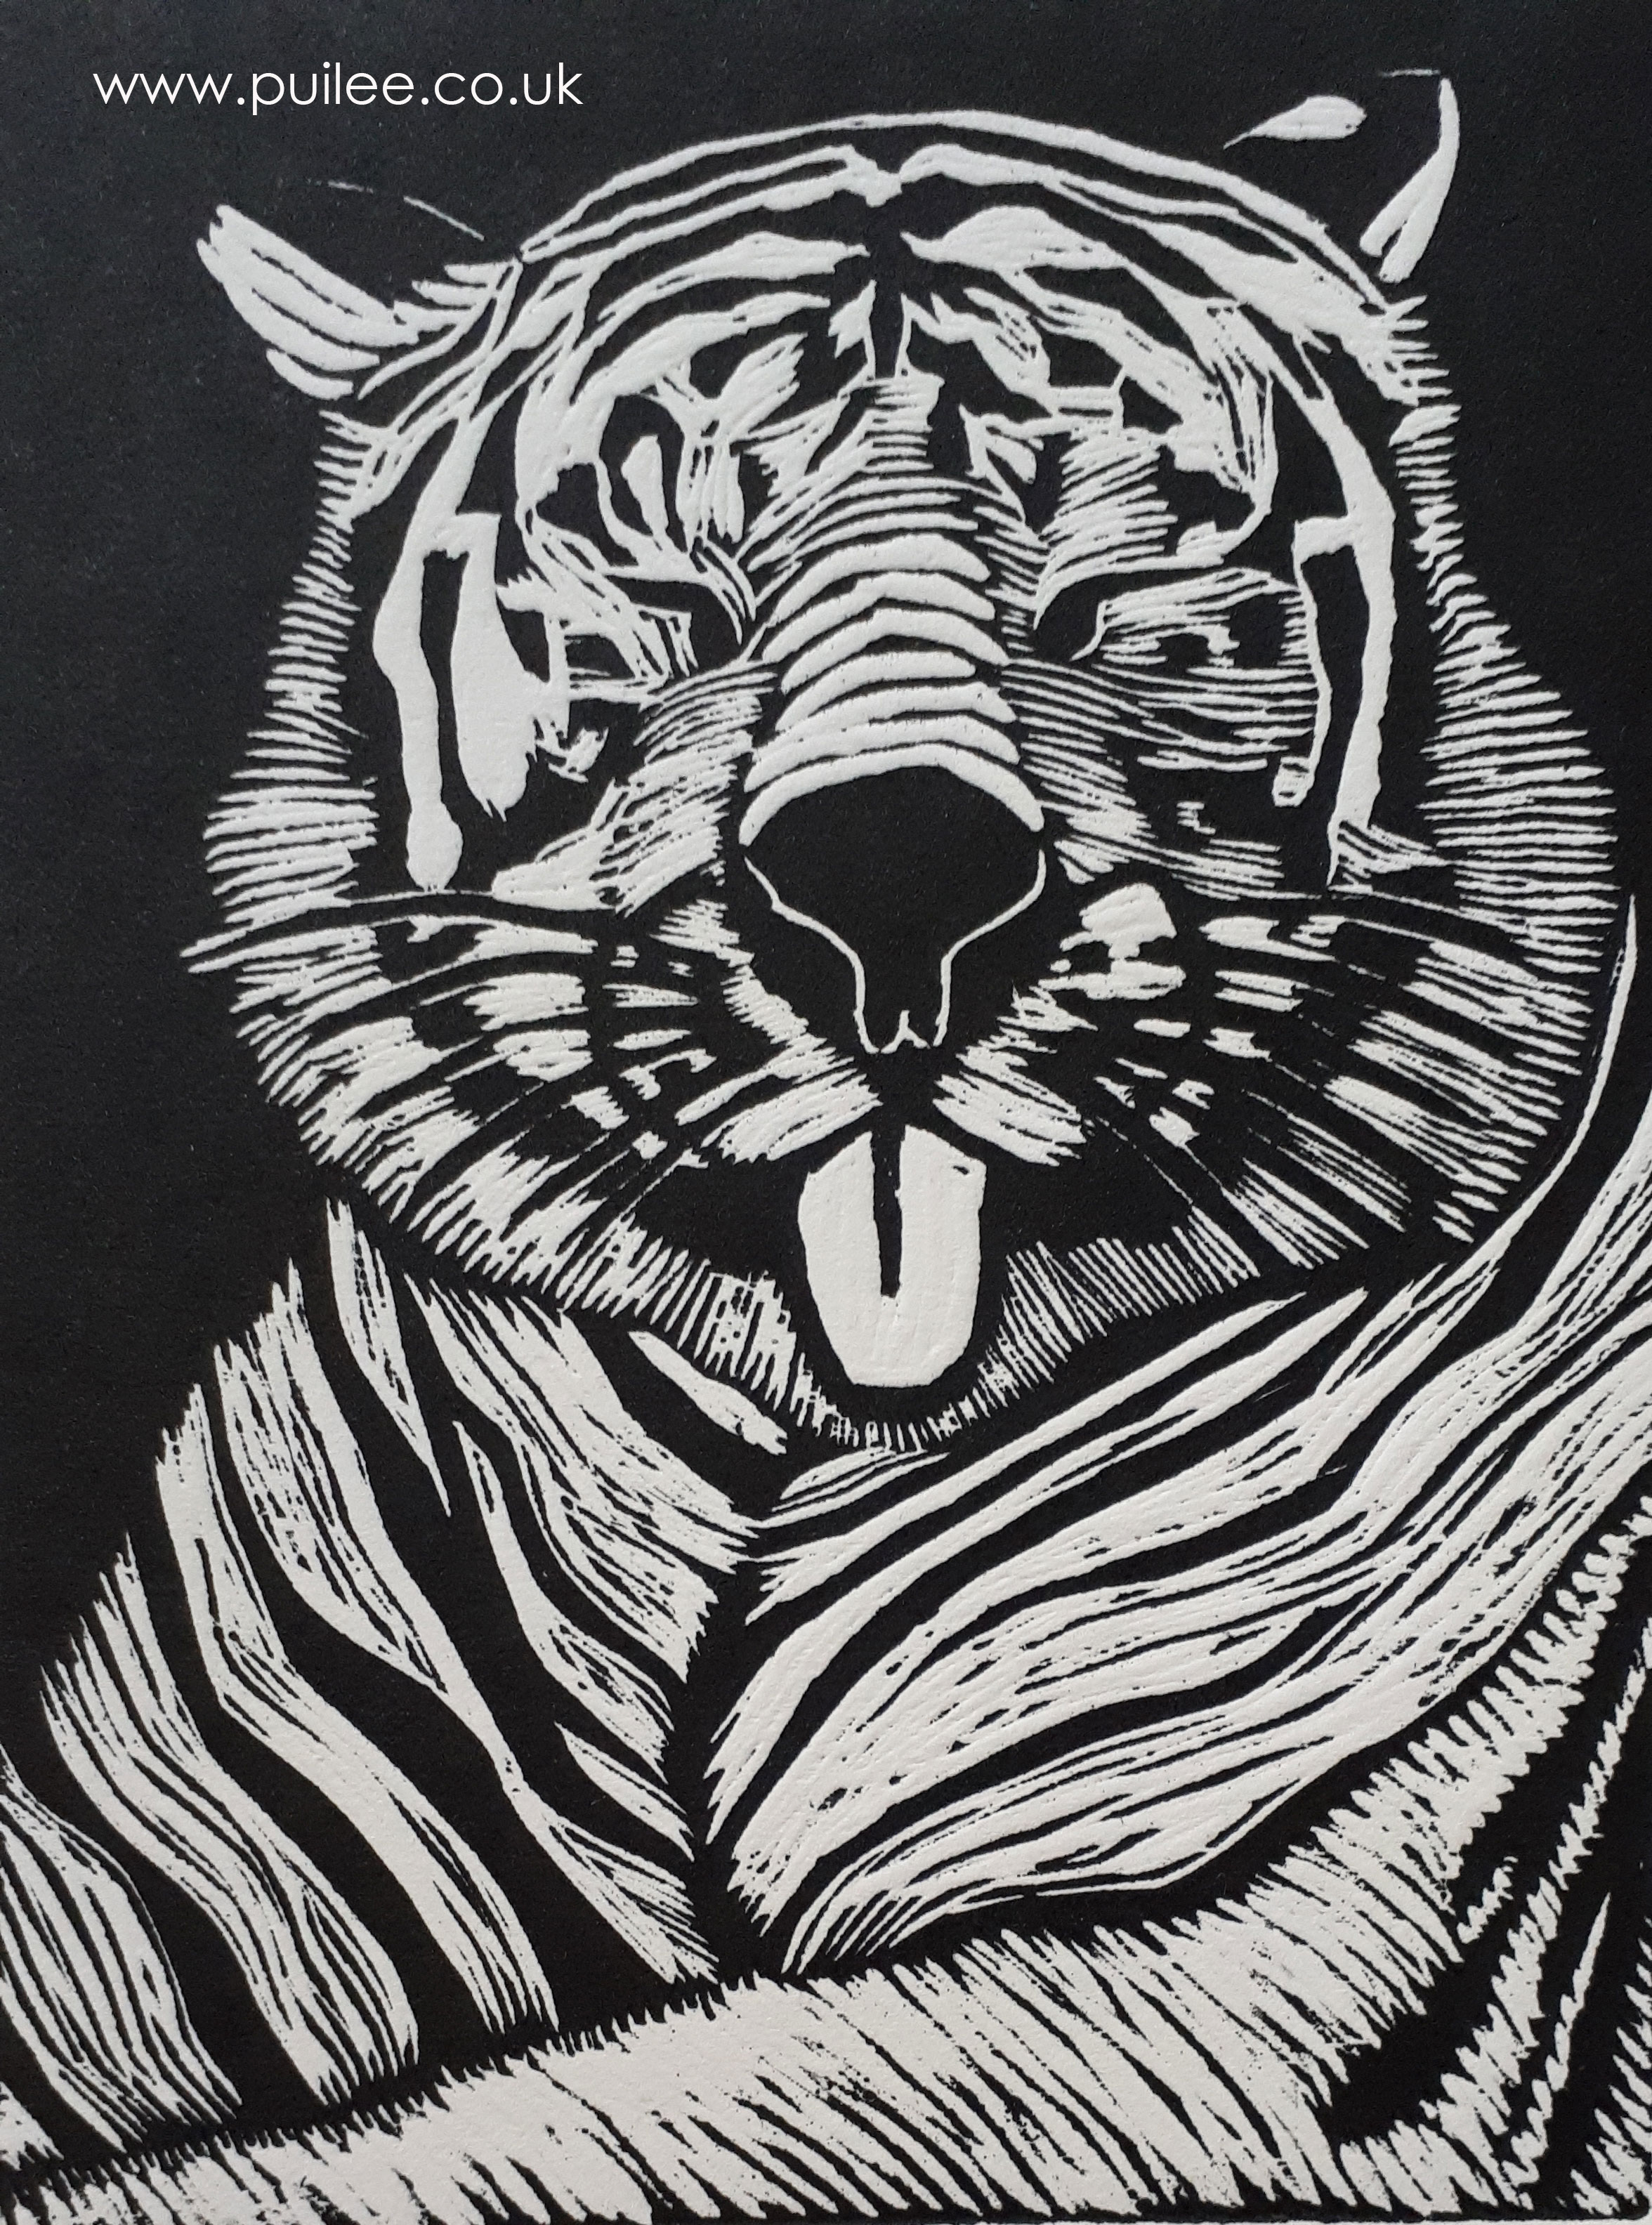 Animal Antics: Tiger (2018) woodcut on Fabriano - Pui Lee